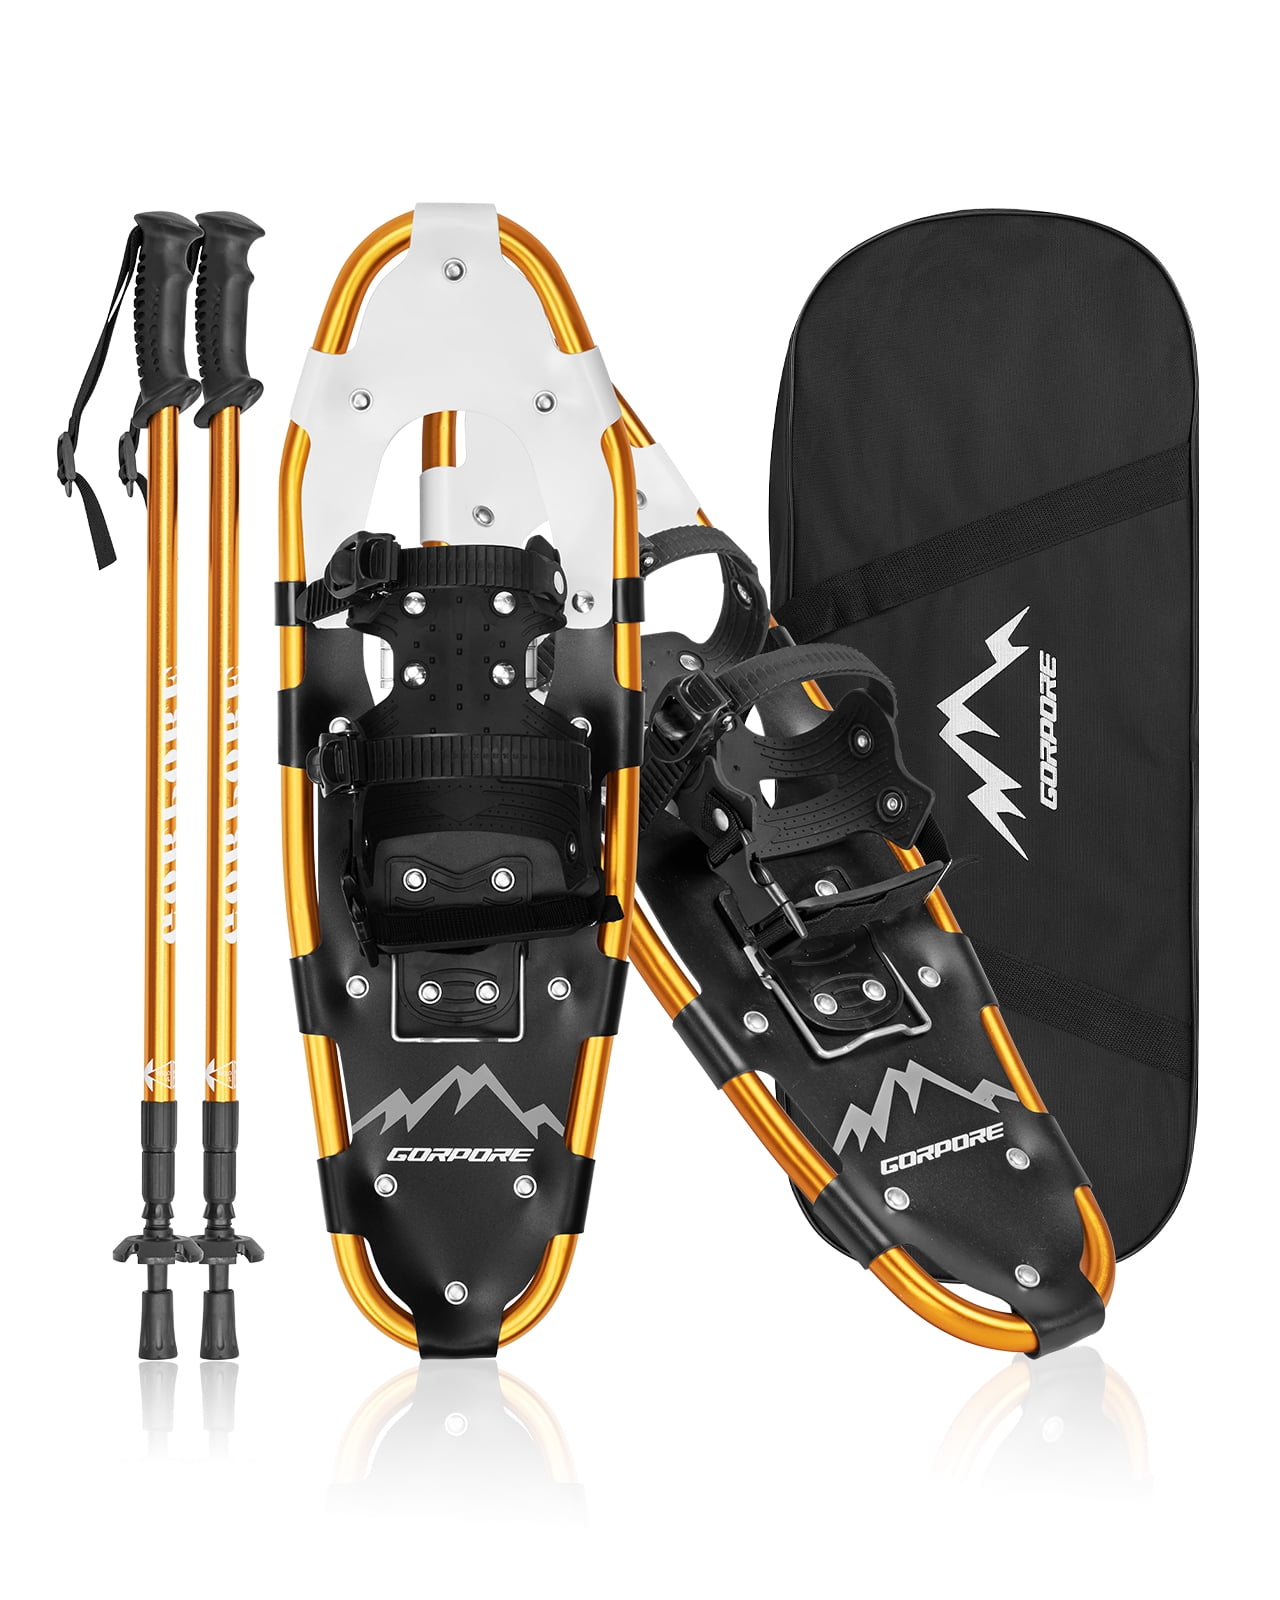 Box Packed Trekker Snowshoes 22 with Adjustable Ratchet Bindings for Men/Women 